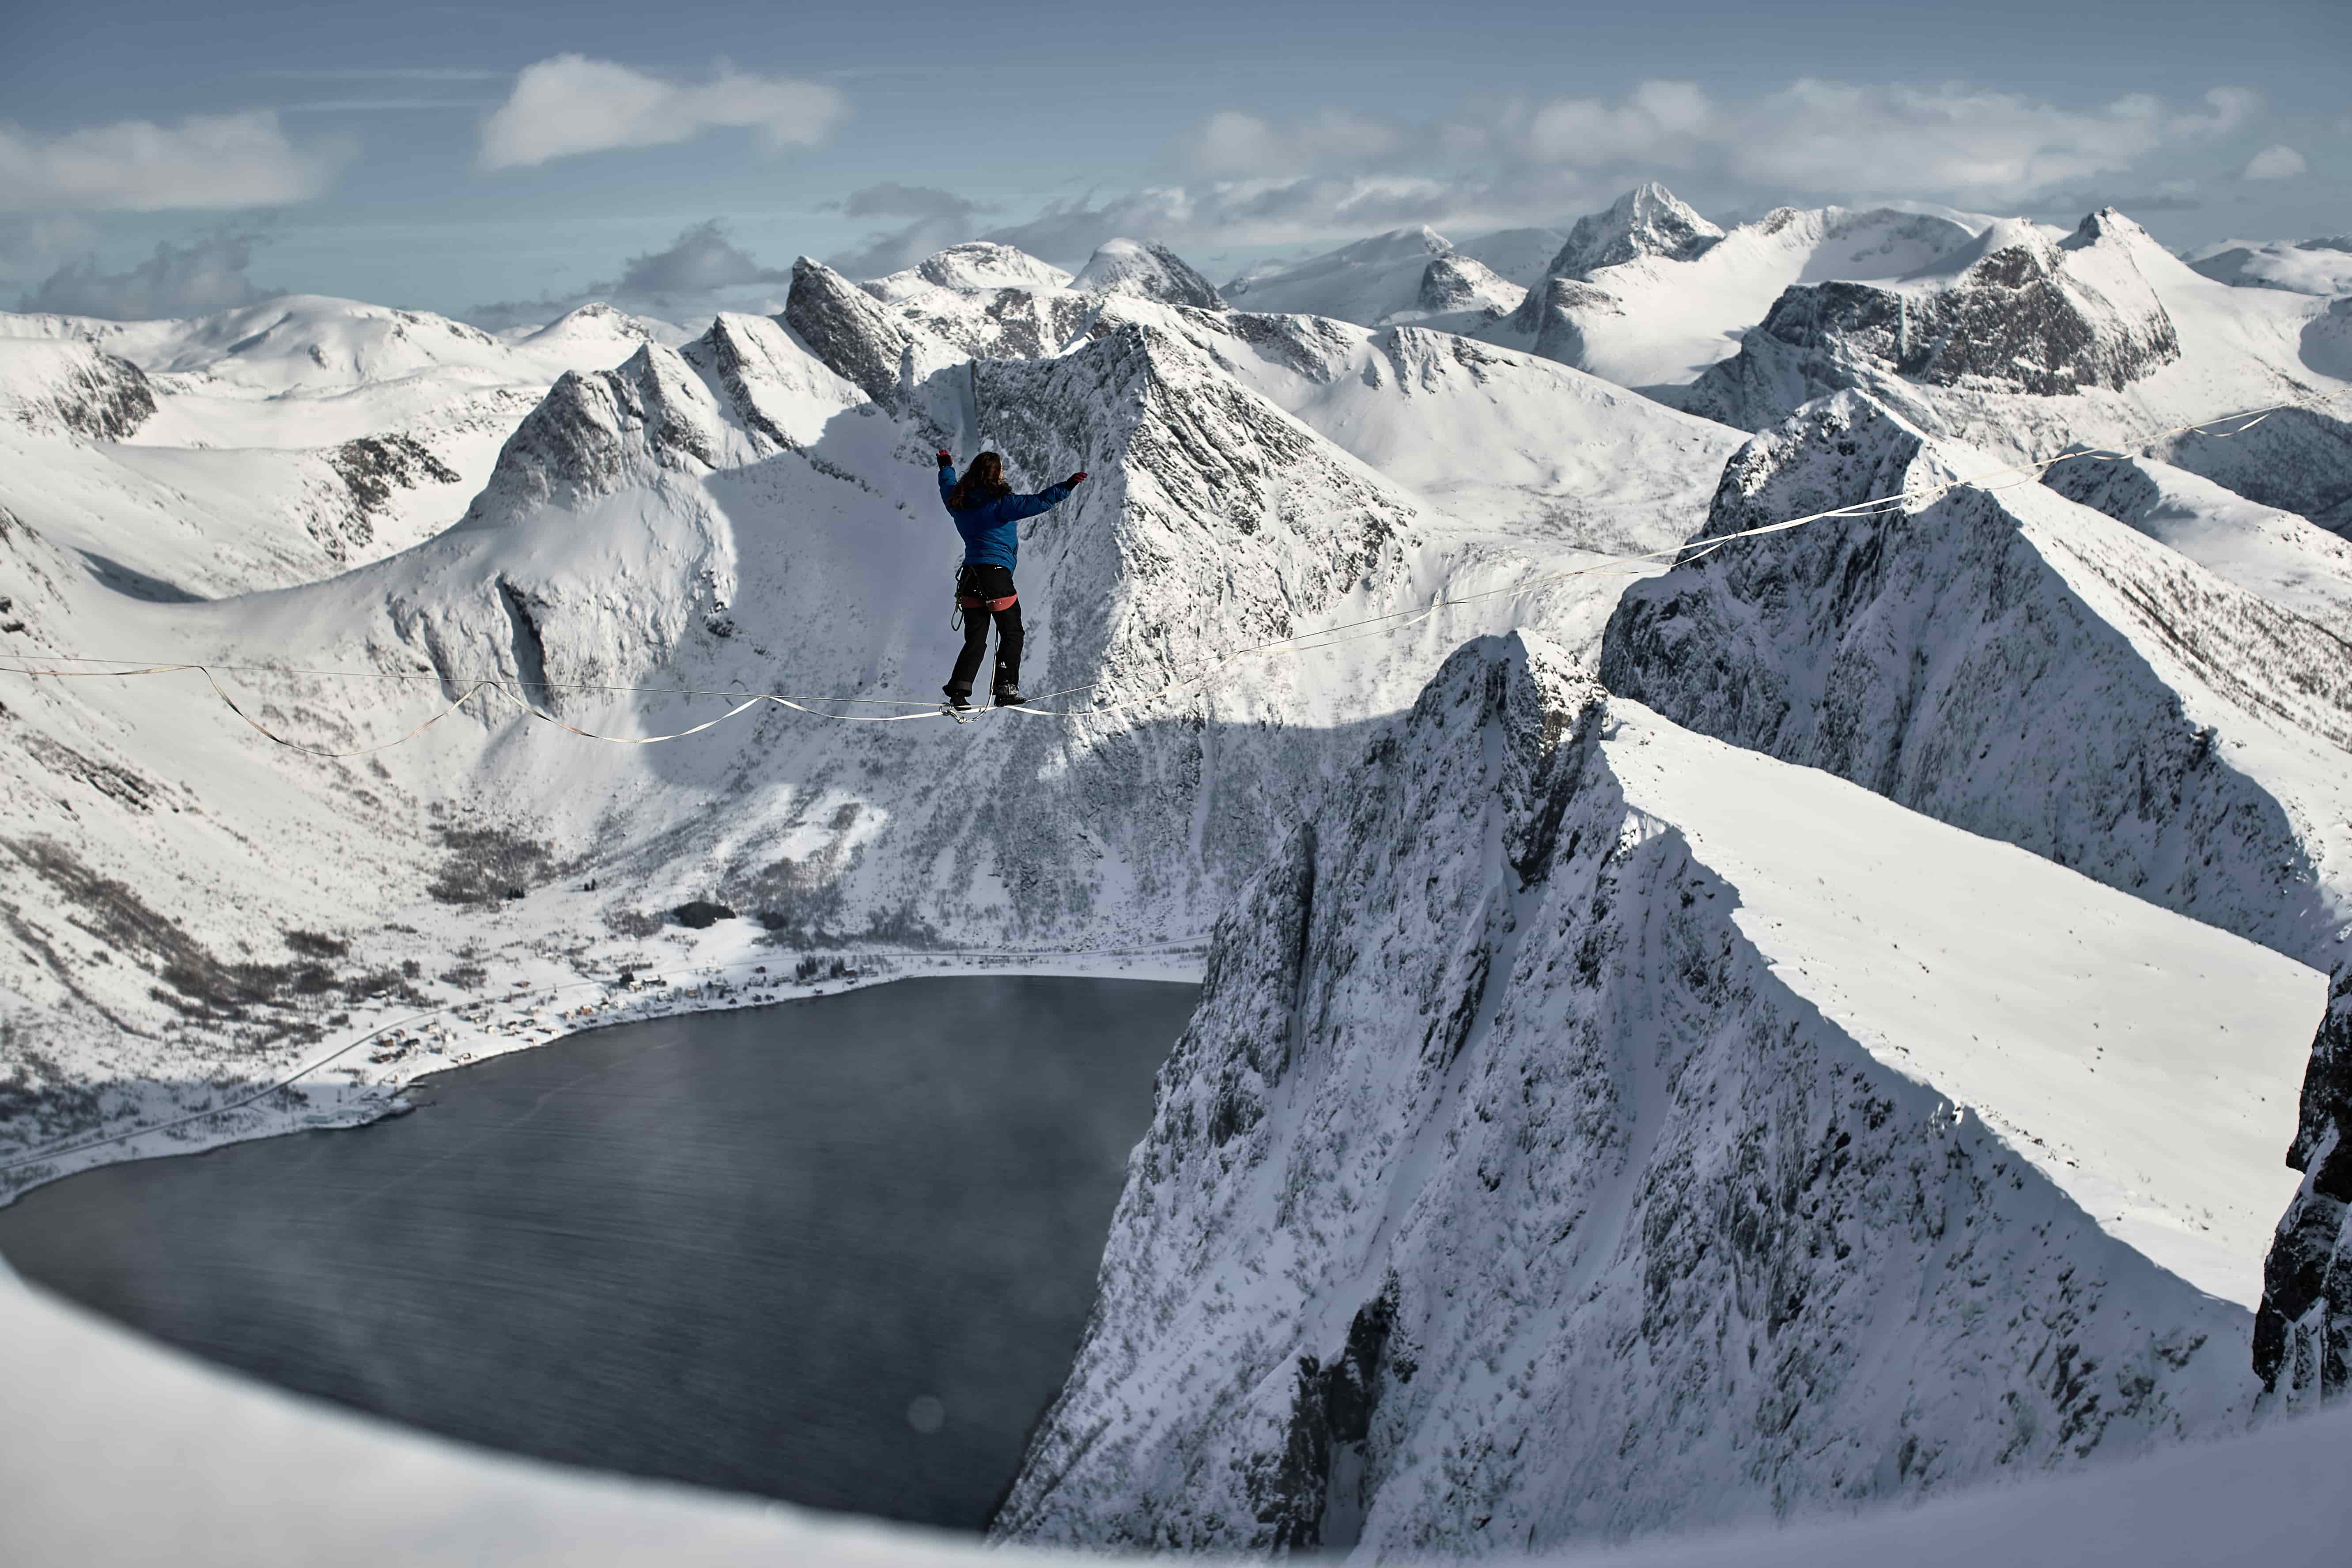 An athlete is walking on a slackline amongst snowcapped mountain peaks.